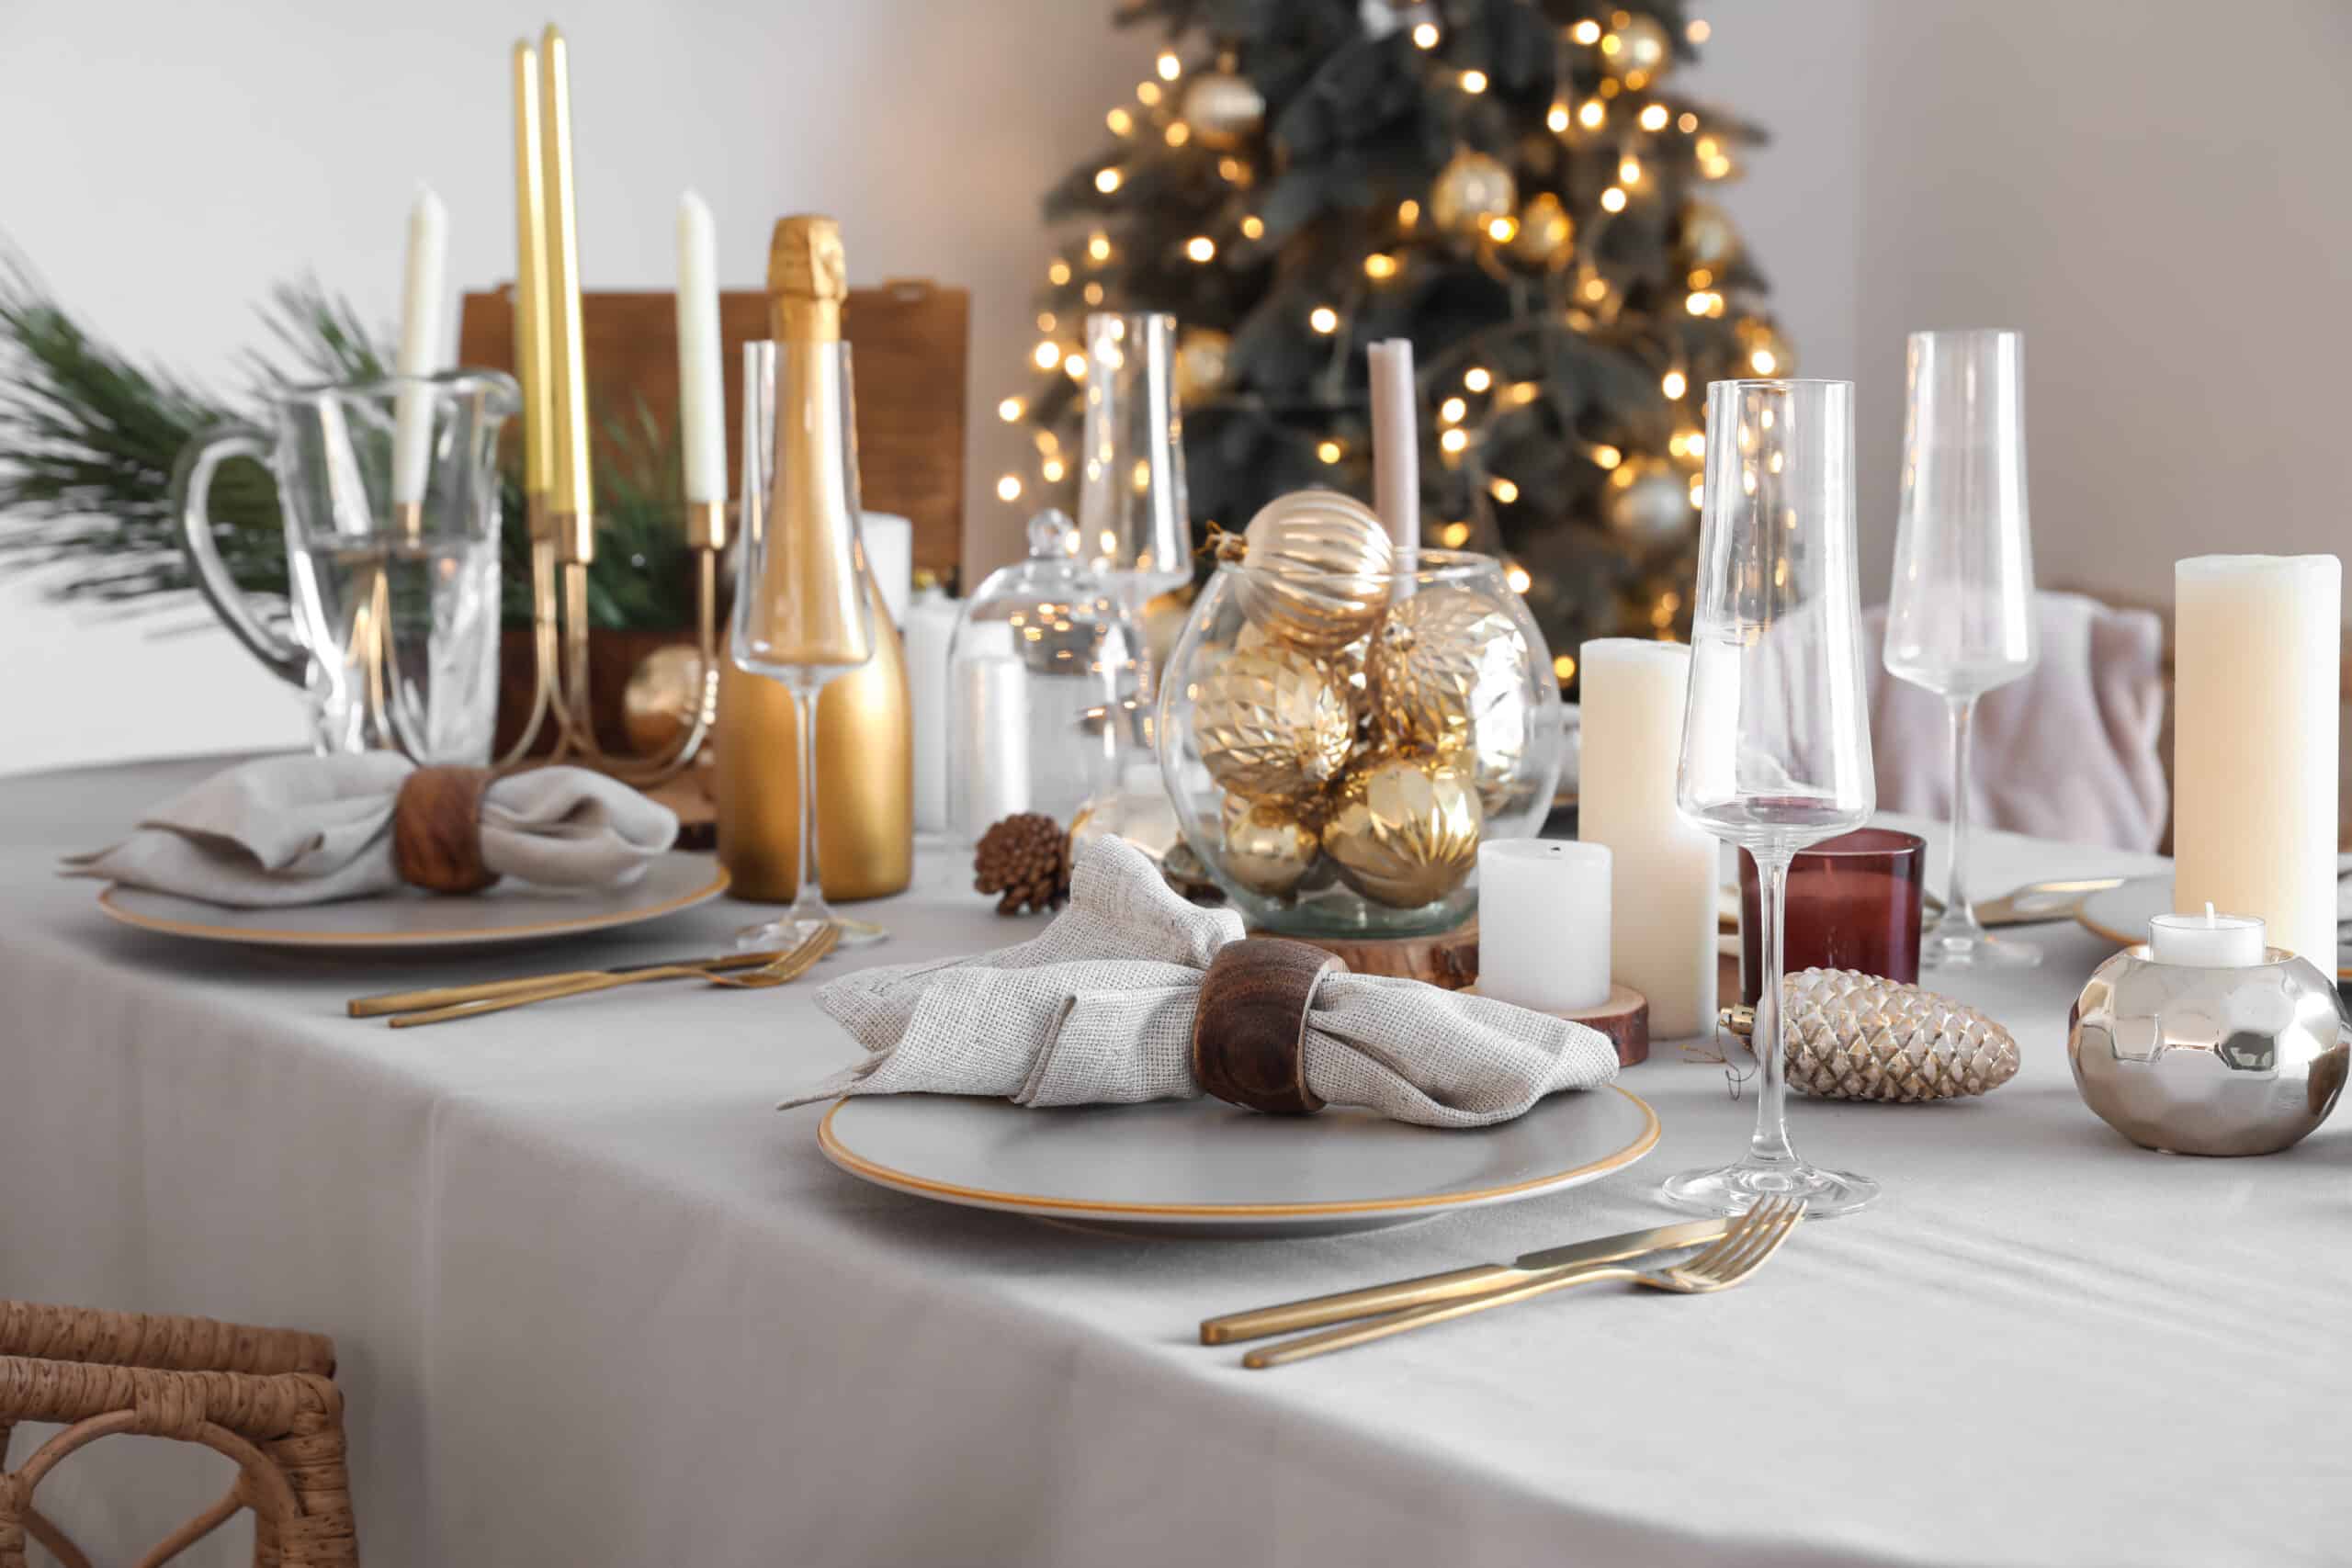 Decoració taula Nadal blanca i daurada